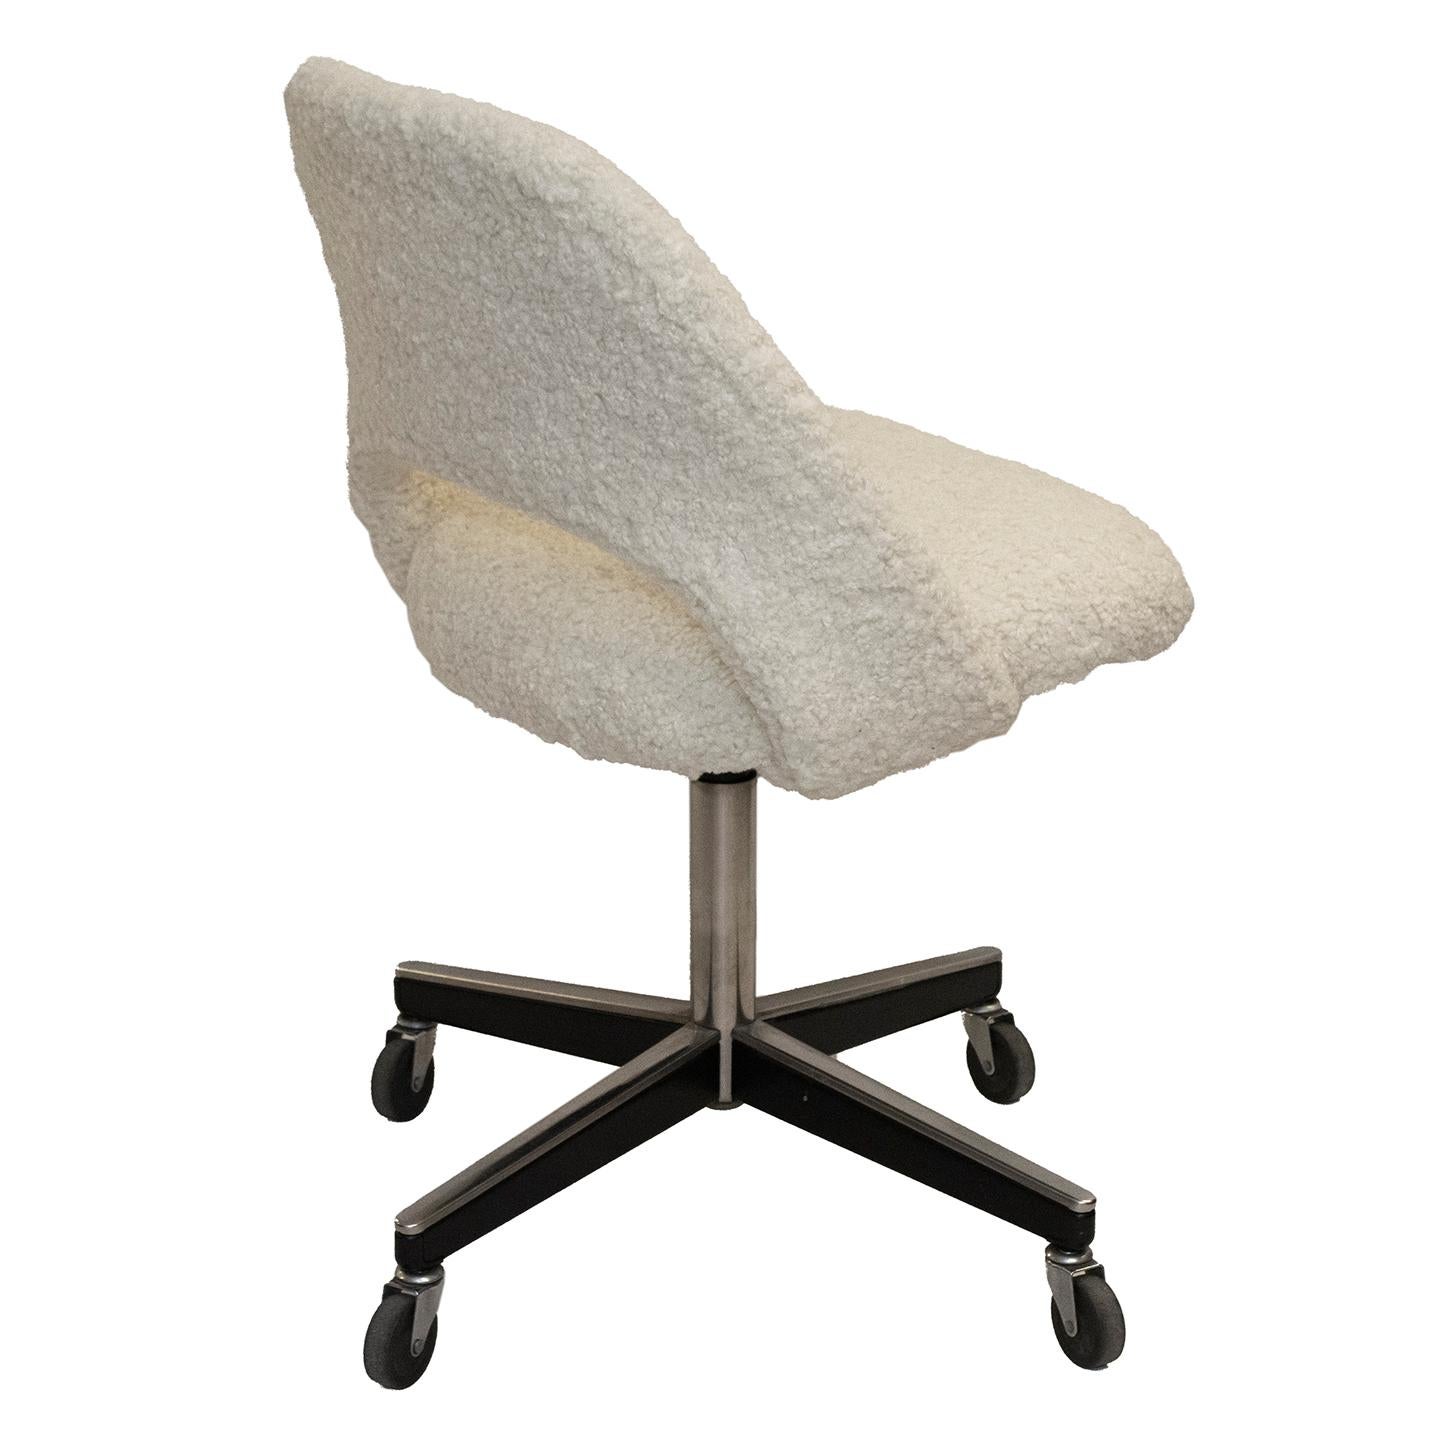 American Vintage Knoll Saarinen Desk Swivel Chair Upholstered in White Faux Shearling